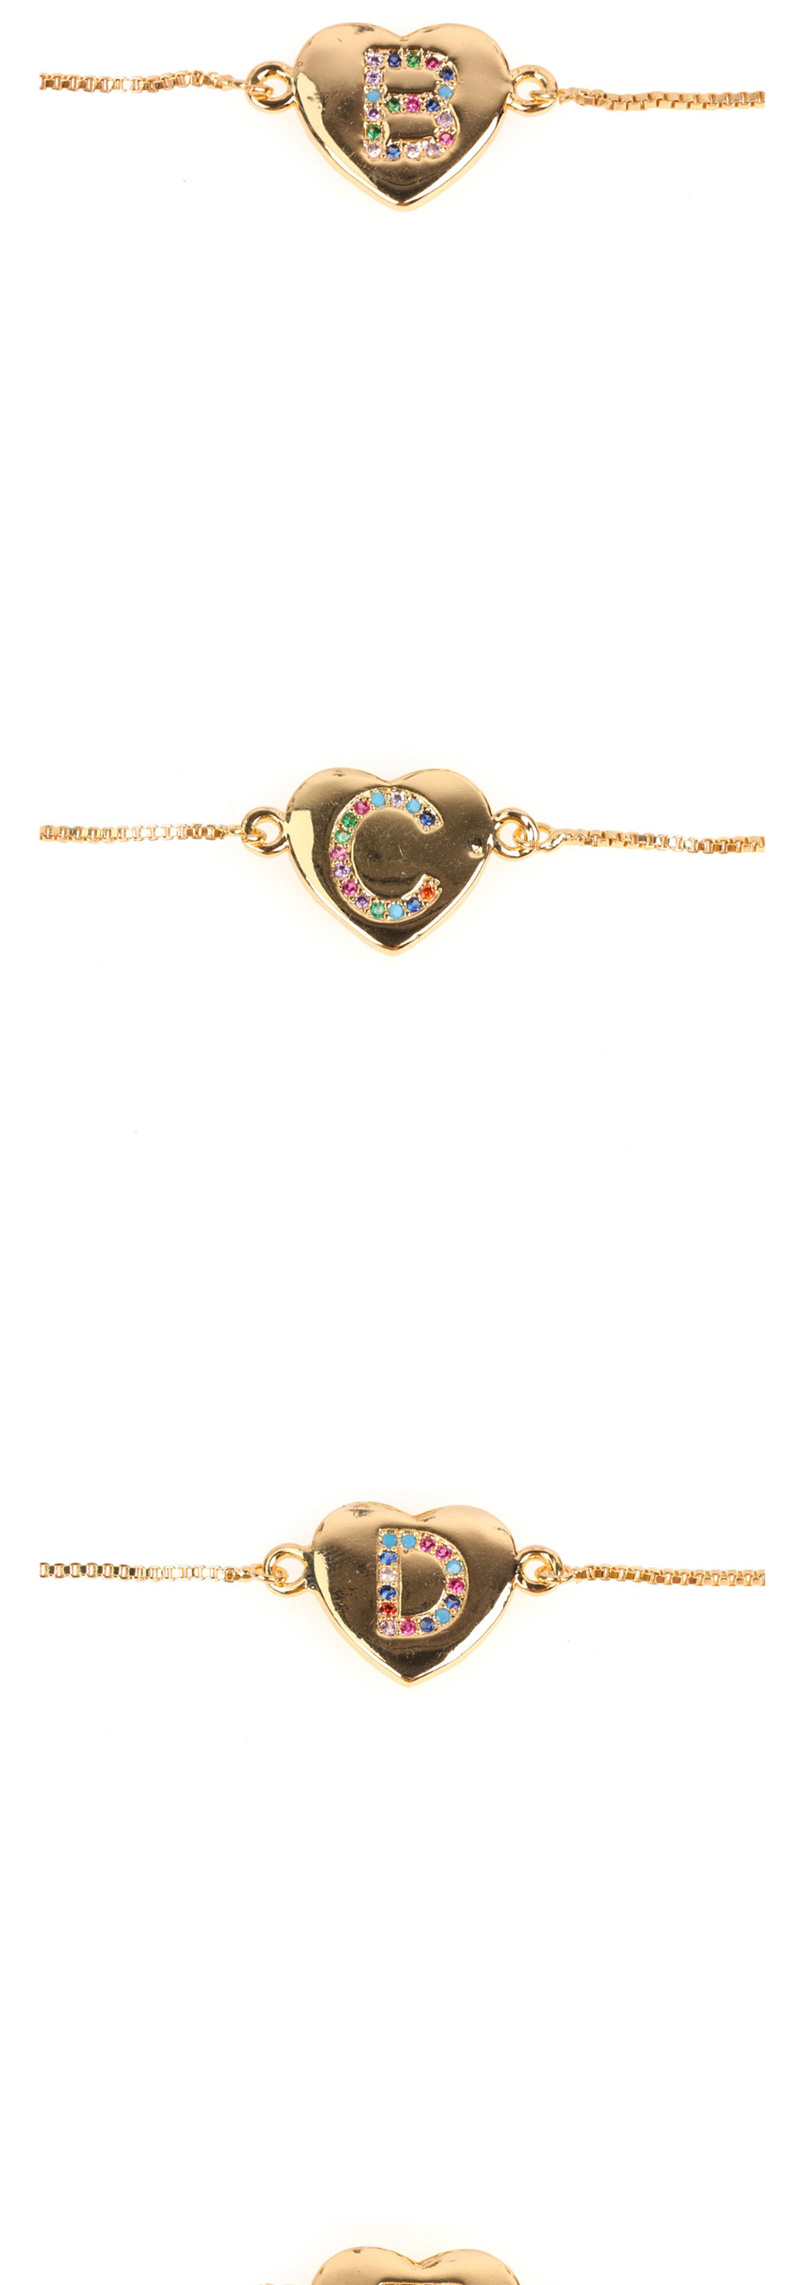 Fashion O Golden Heart Bracelet With Diamonds And Letters,Bracelets